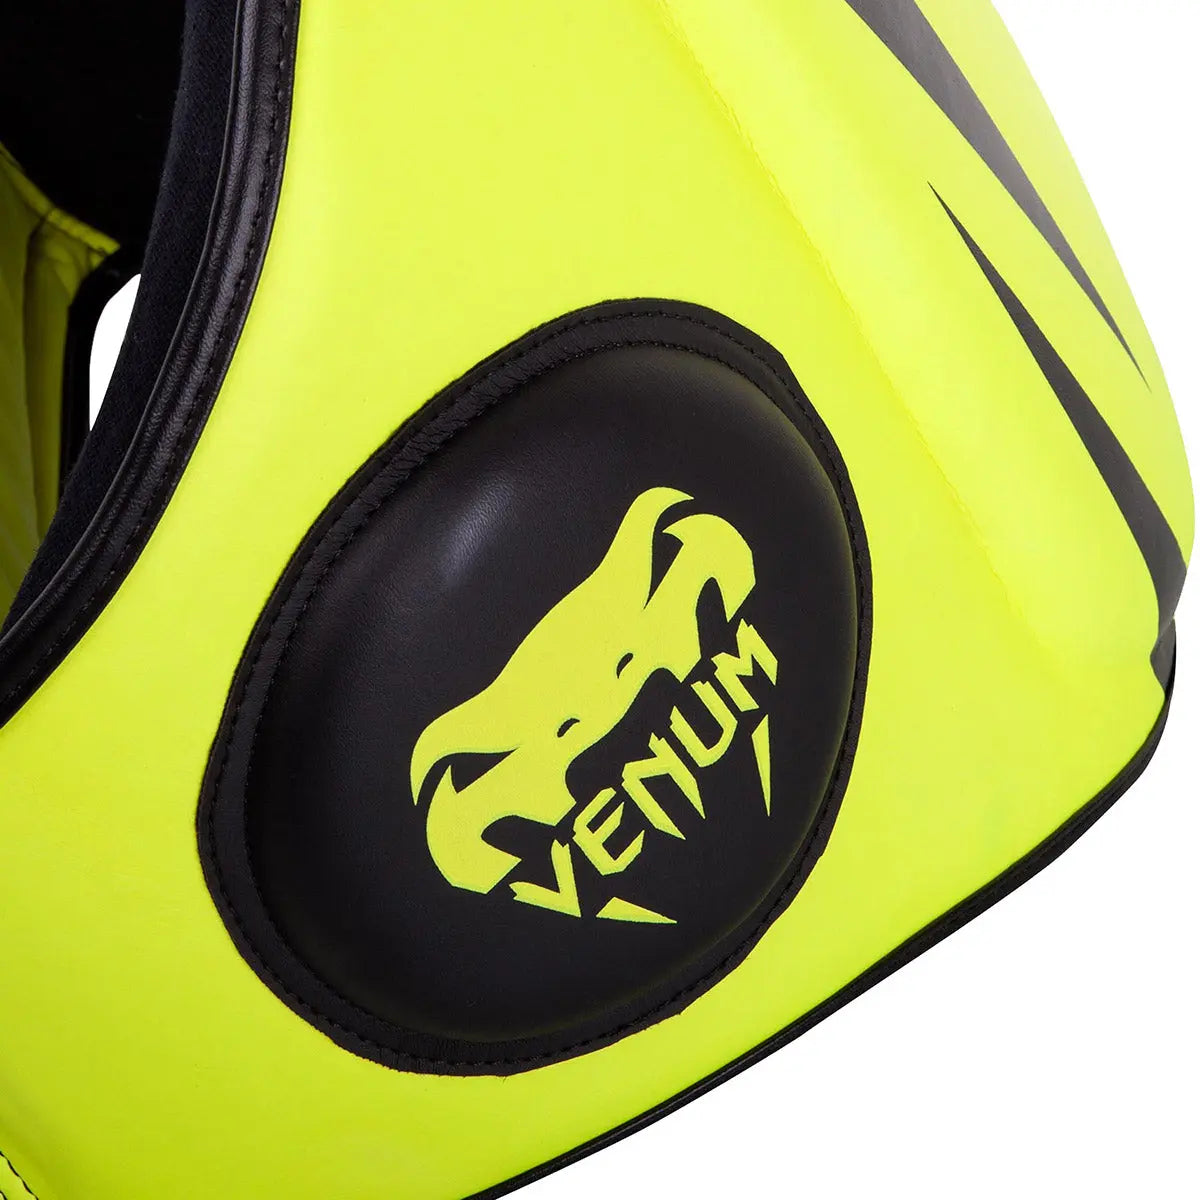 Venum Elite Adjustable MMA Training Belly Protector Venum